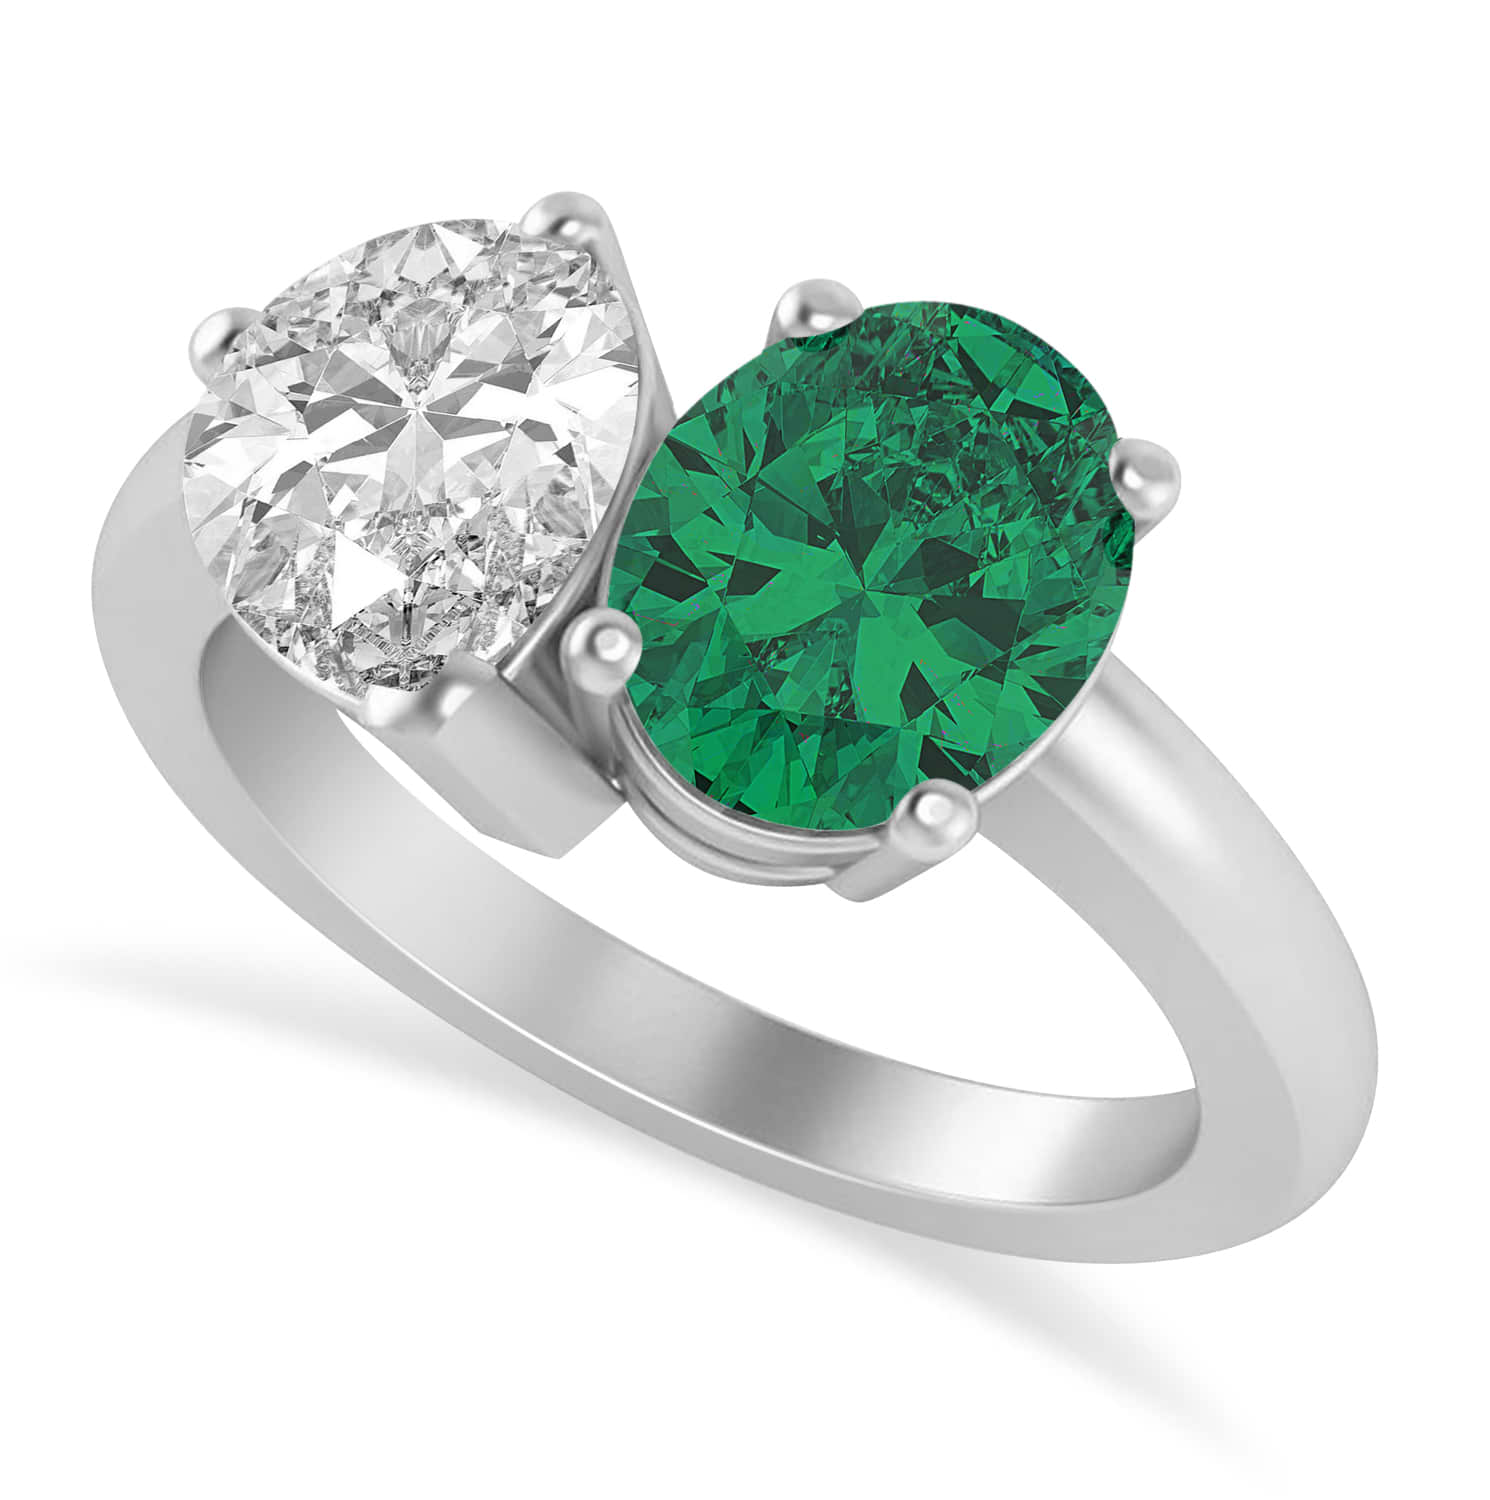 Oval/Pear Diamond & Emerald Toi et Moi Ring 18k White Gold (4.50ct)